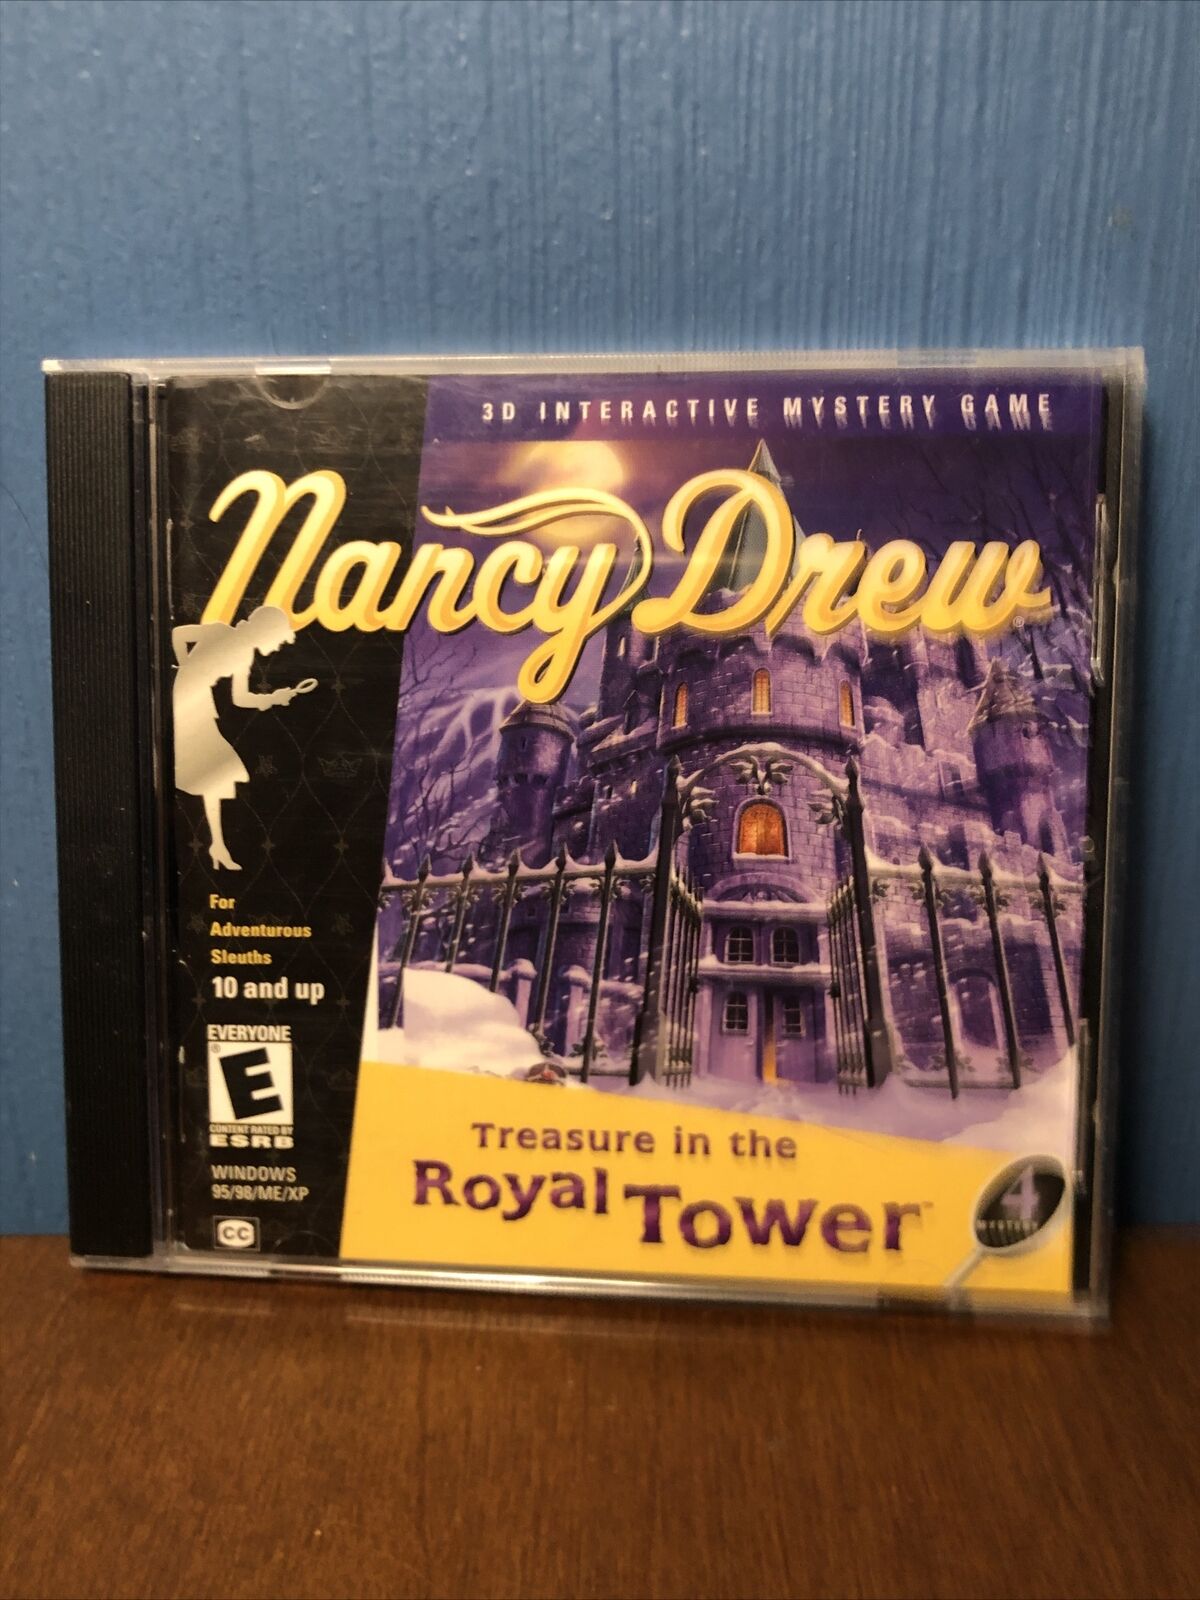 VINTAGE Nancy Drew Treasure in the Royal Tower PC CD ROM Video Game Complete CIB